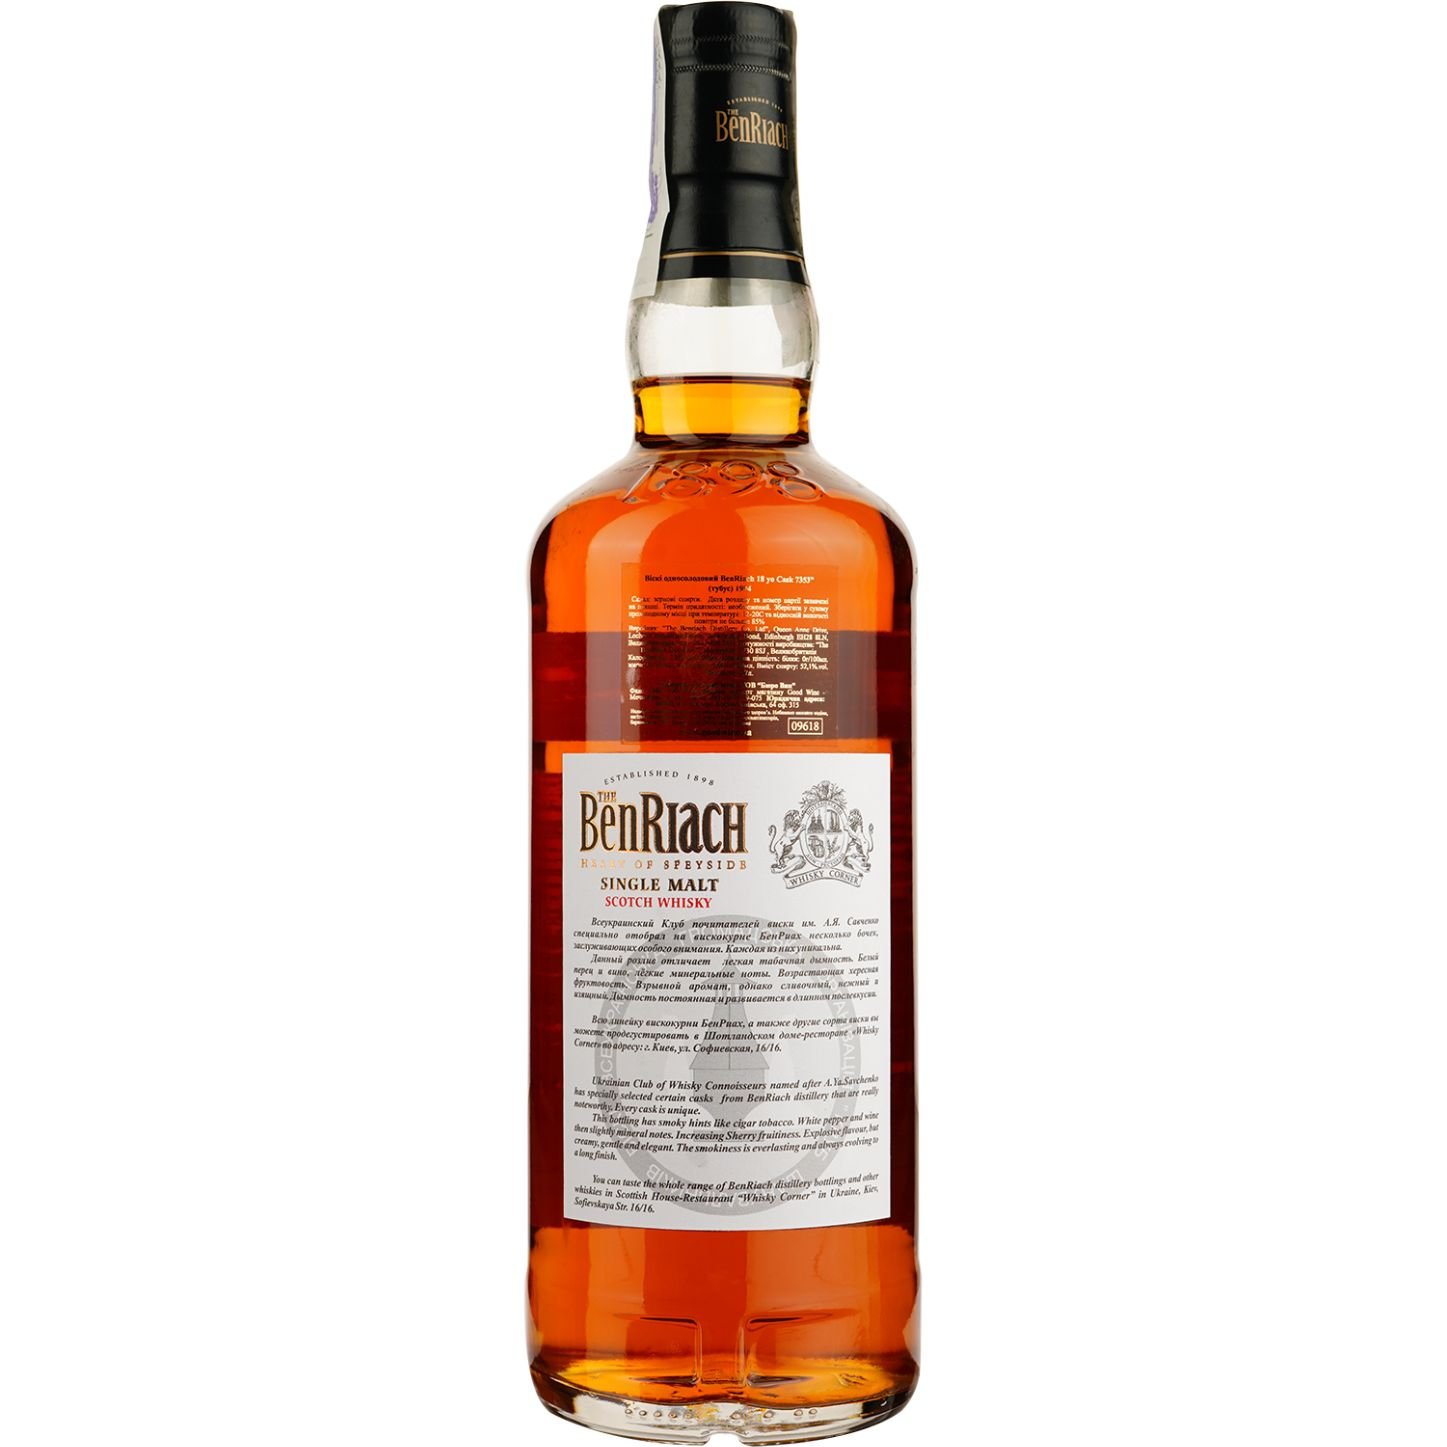 Віскі BenRiach 18 Years Old Rum Barrel Cask 1644 Single Malt Scotch Whisky, у подарунковій упаковці, 57,6%, 0,7 л - фото 4